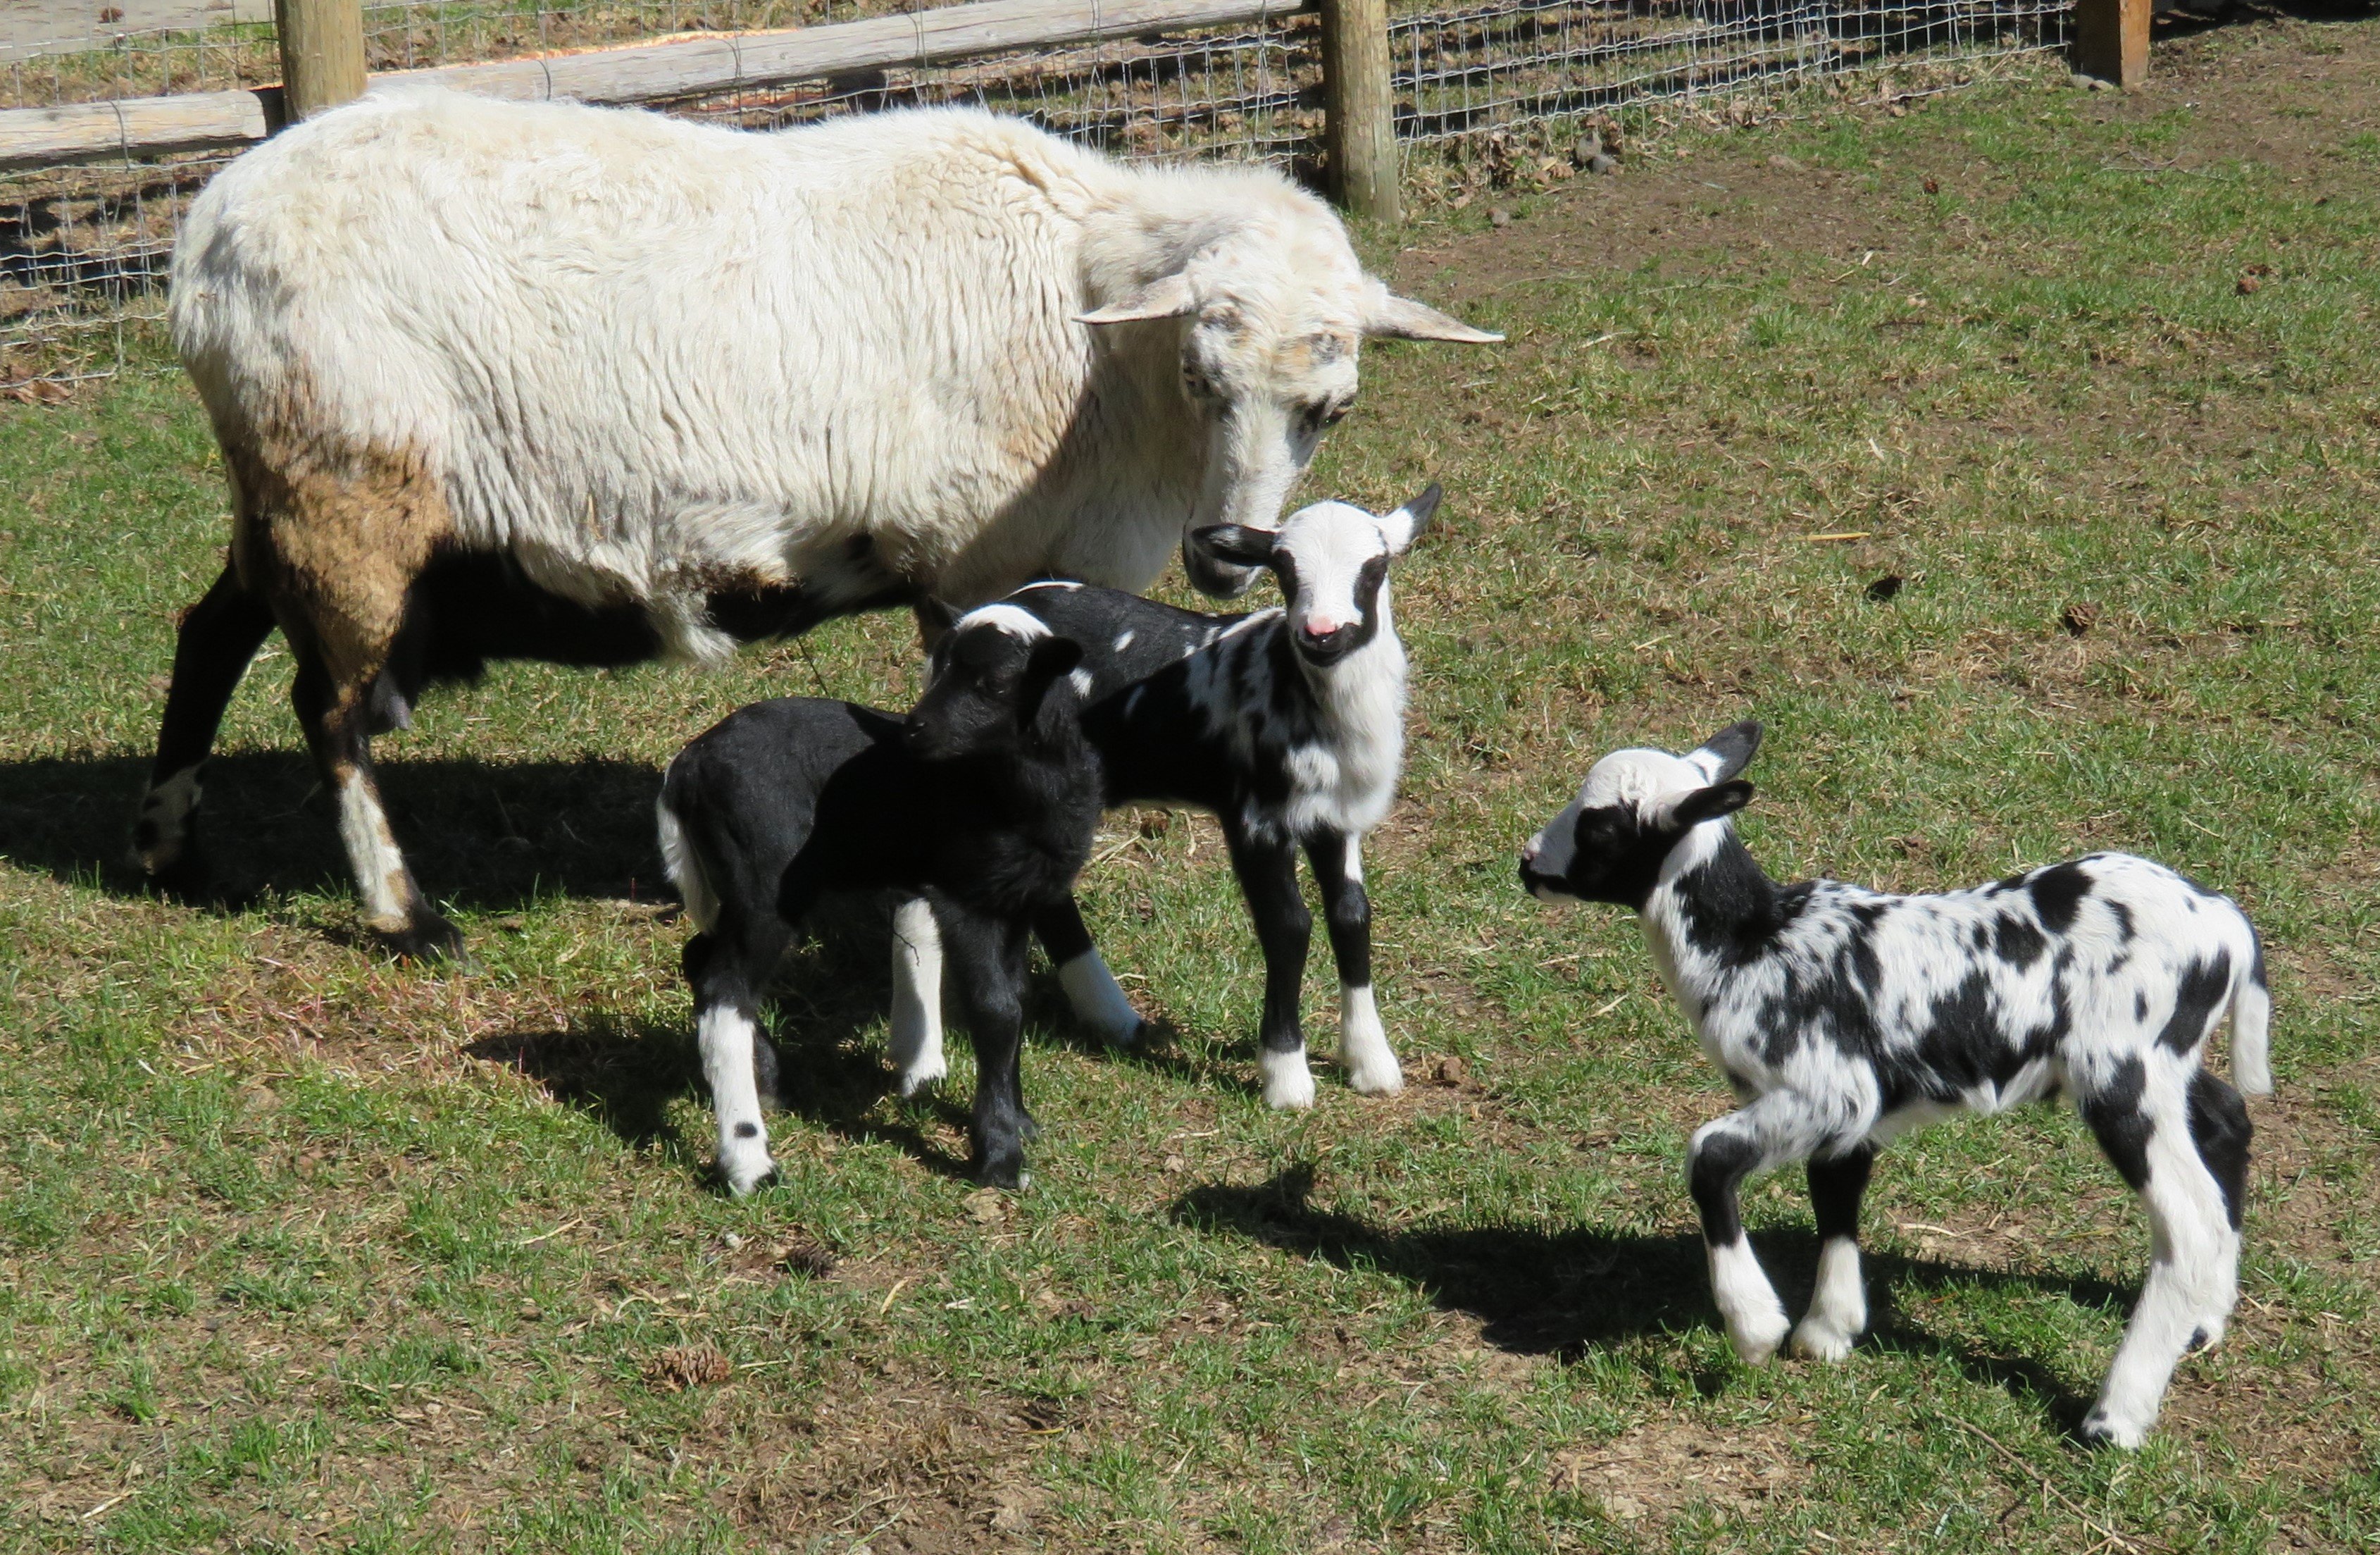 Joy & 3 ram lambs
Ram C $300(sold), B $400(sold), A $400(sold)